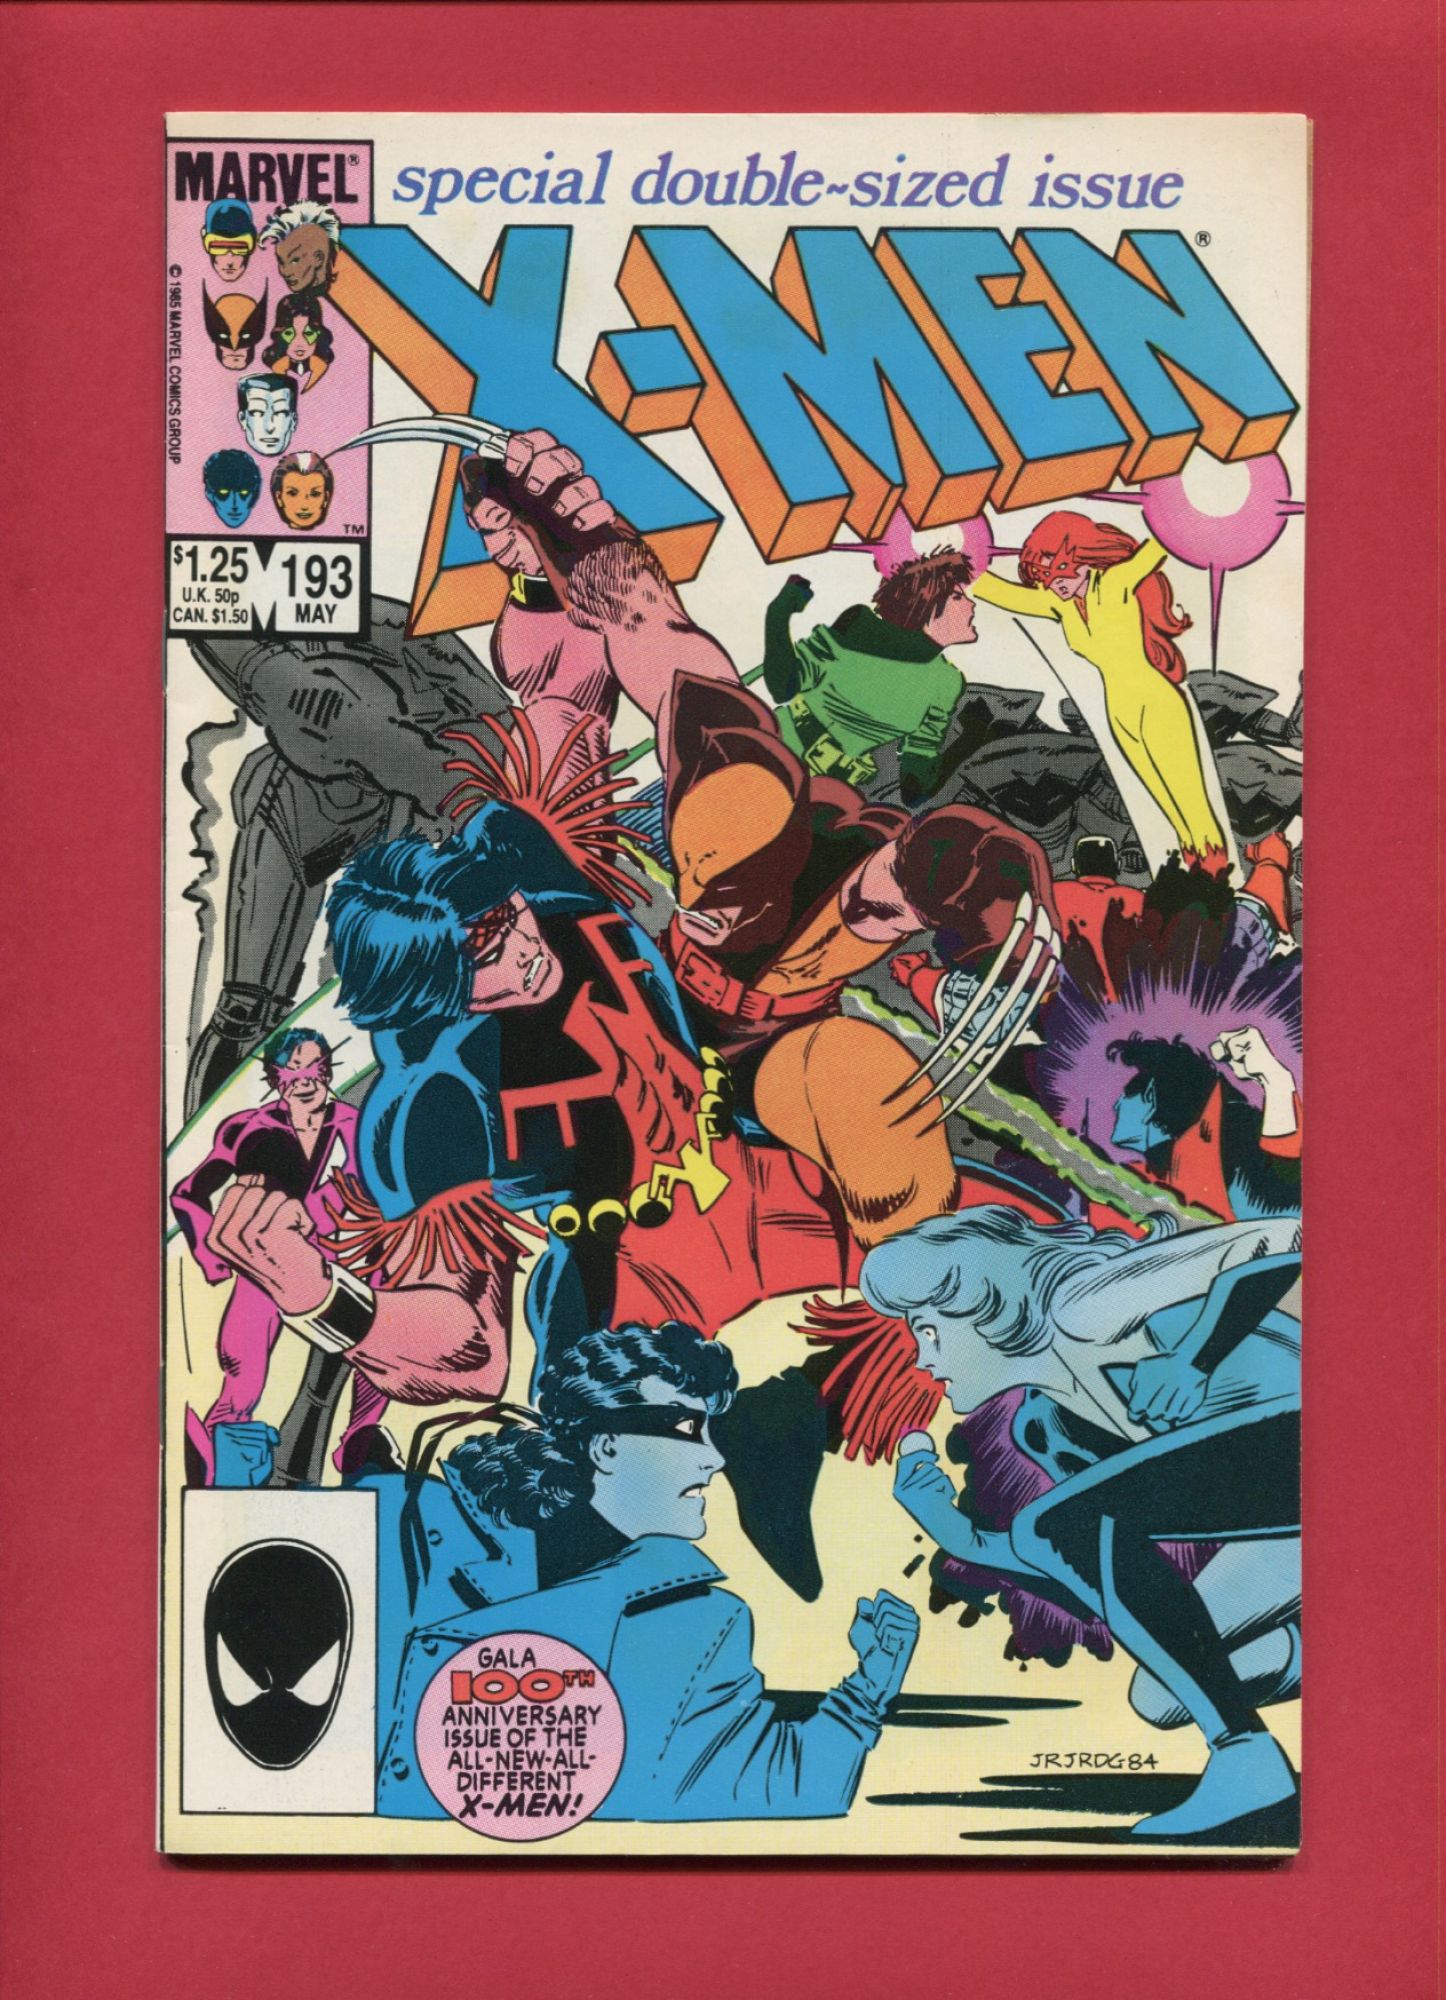 Uncanny X-Men #193, May 1985, 8.5 VF+